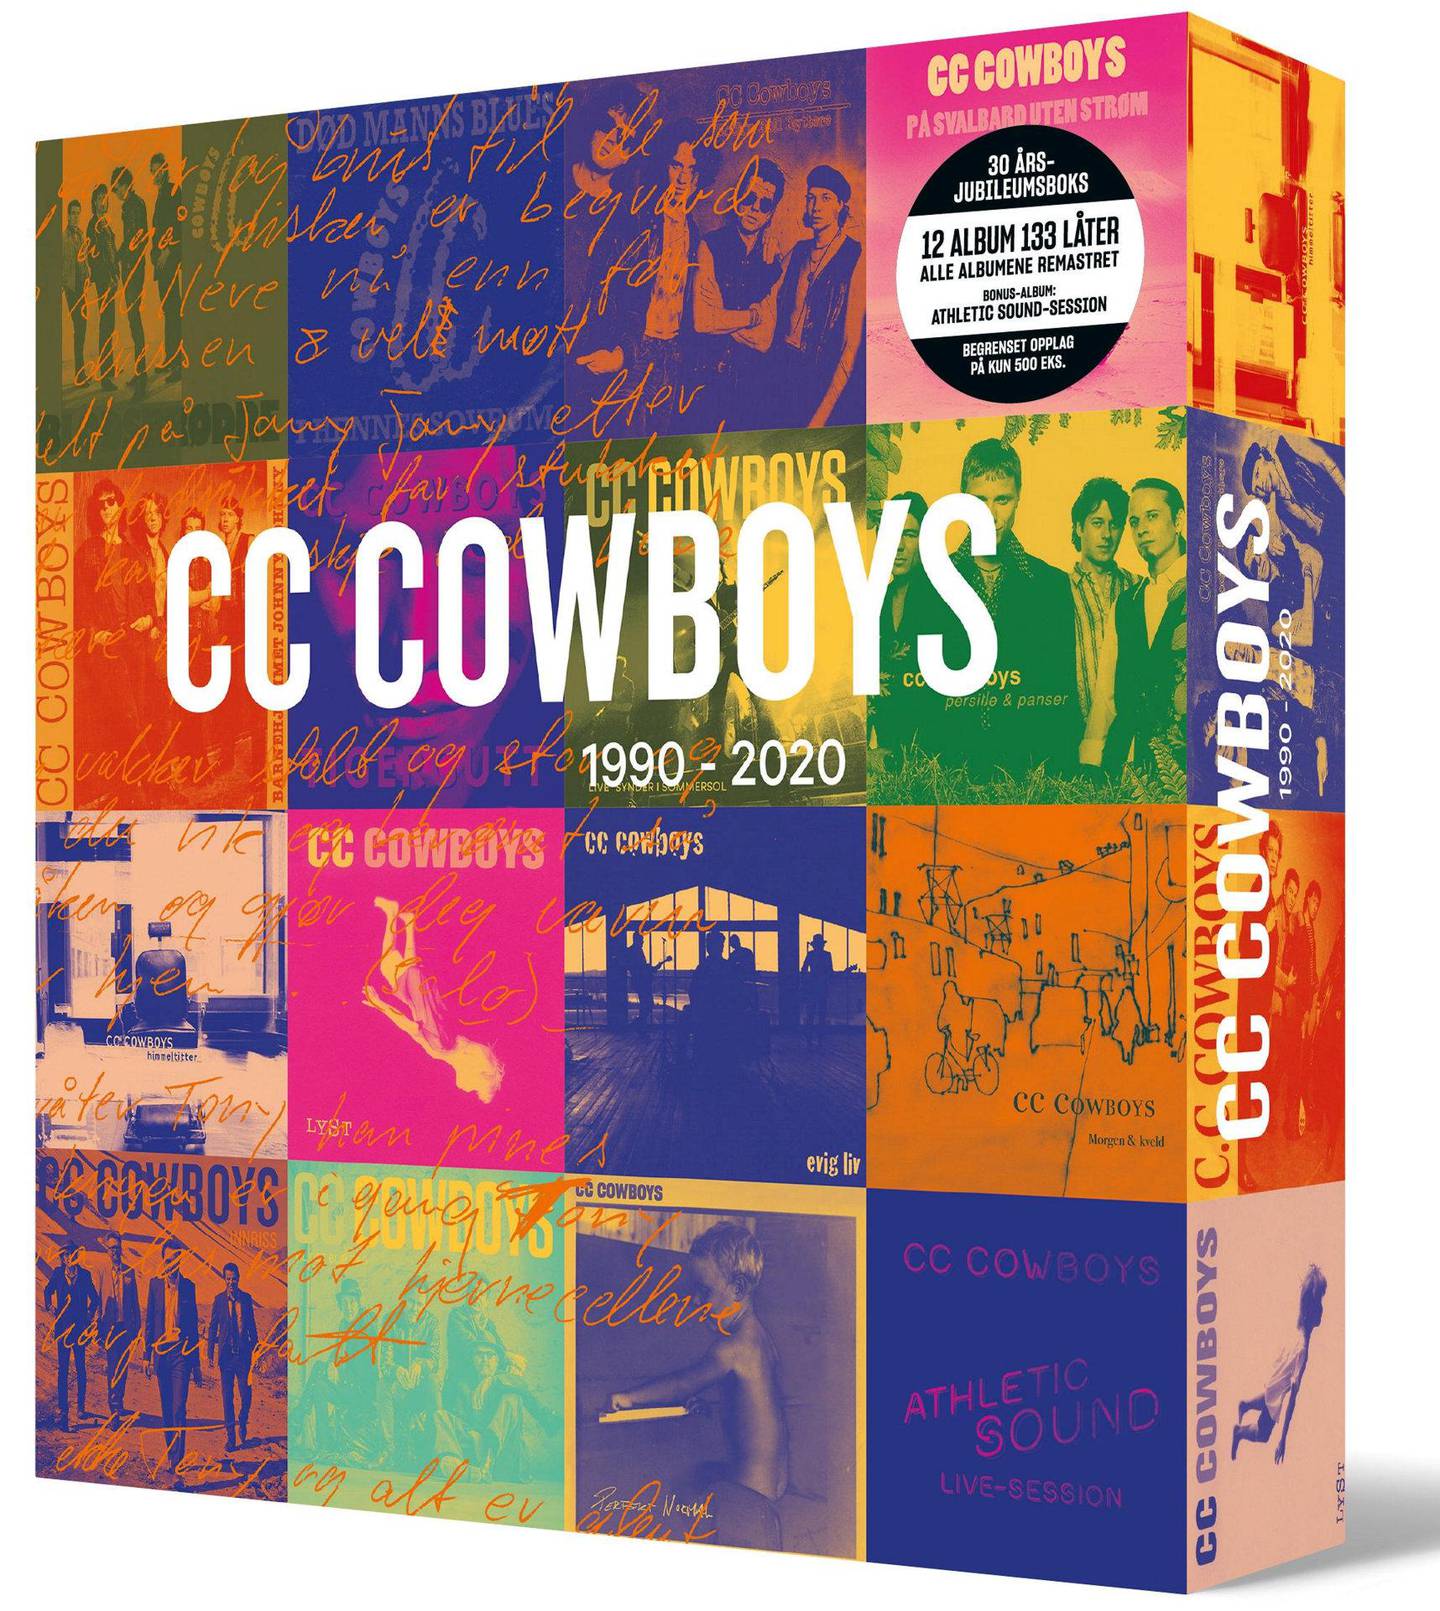 CC Cowboys,KUL Anm Musikk B:«1990 - 2020»
KUL Anm Musikk C:Drabant